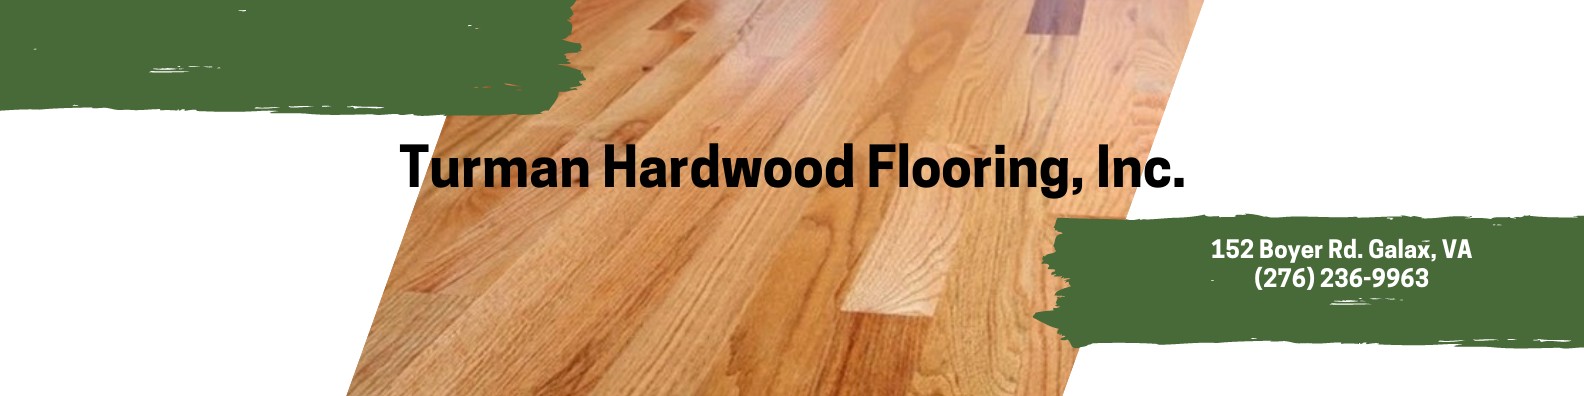 Turman Hardwood Flooring Inc Linkedin, Hardwood Flooring Galax Va